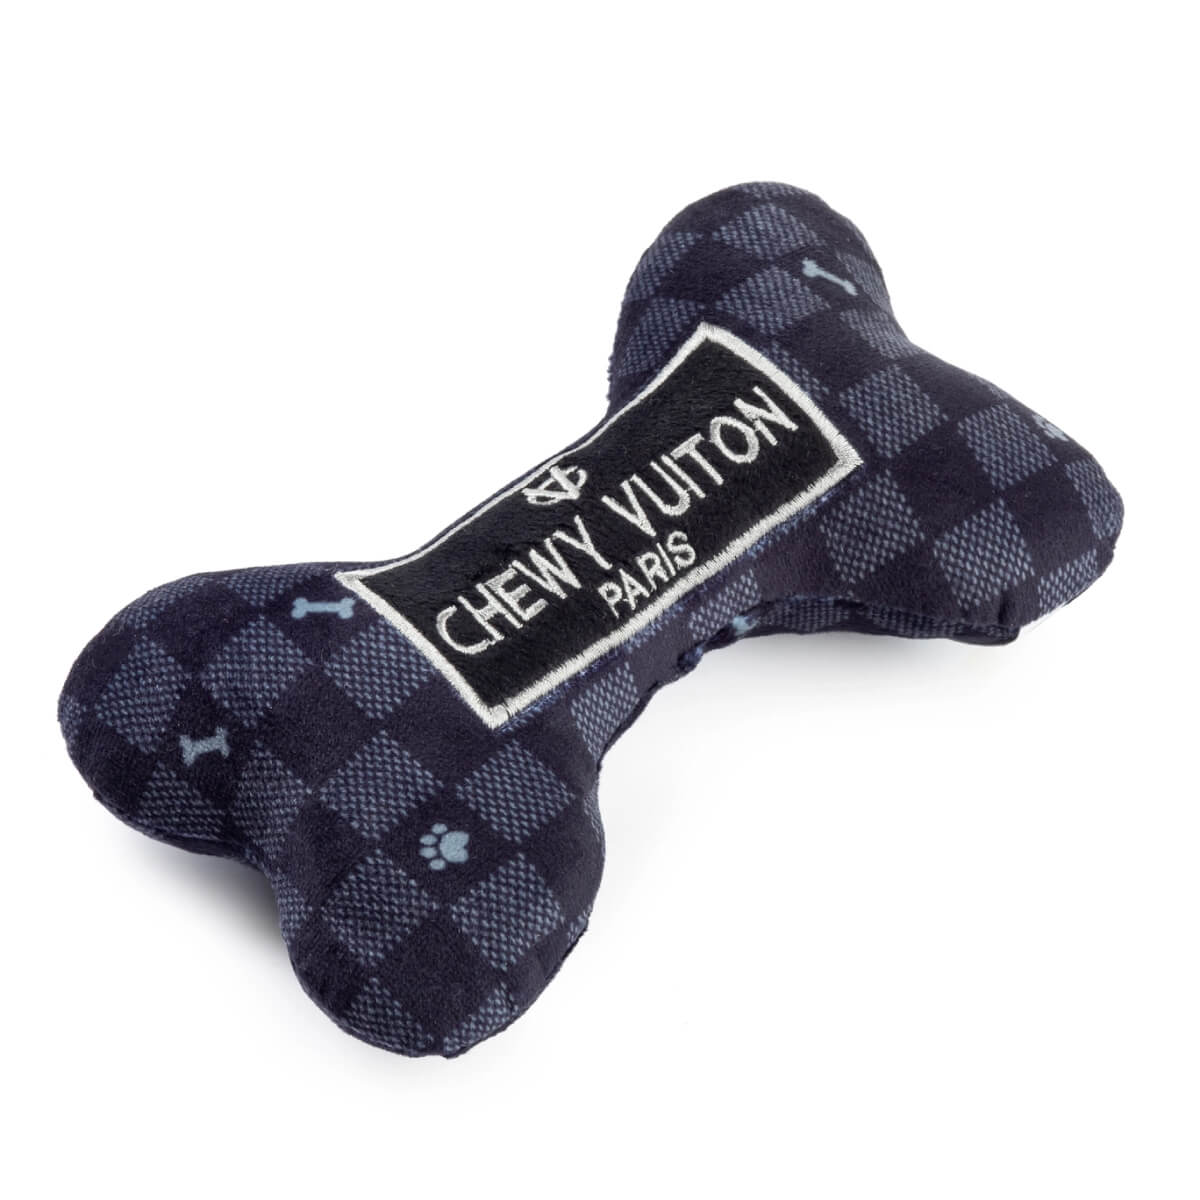 Black Checker Chewy Vuiton Bone Squeaker Dog Toy front | MILK MONEY milkmoney.co | white elephant gift ideas, gift, mother's day gift ideas, white elephant gift, gift shops near me